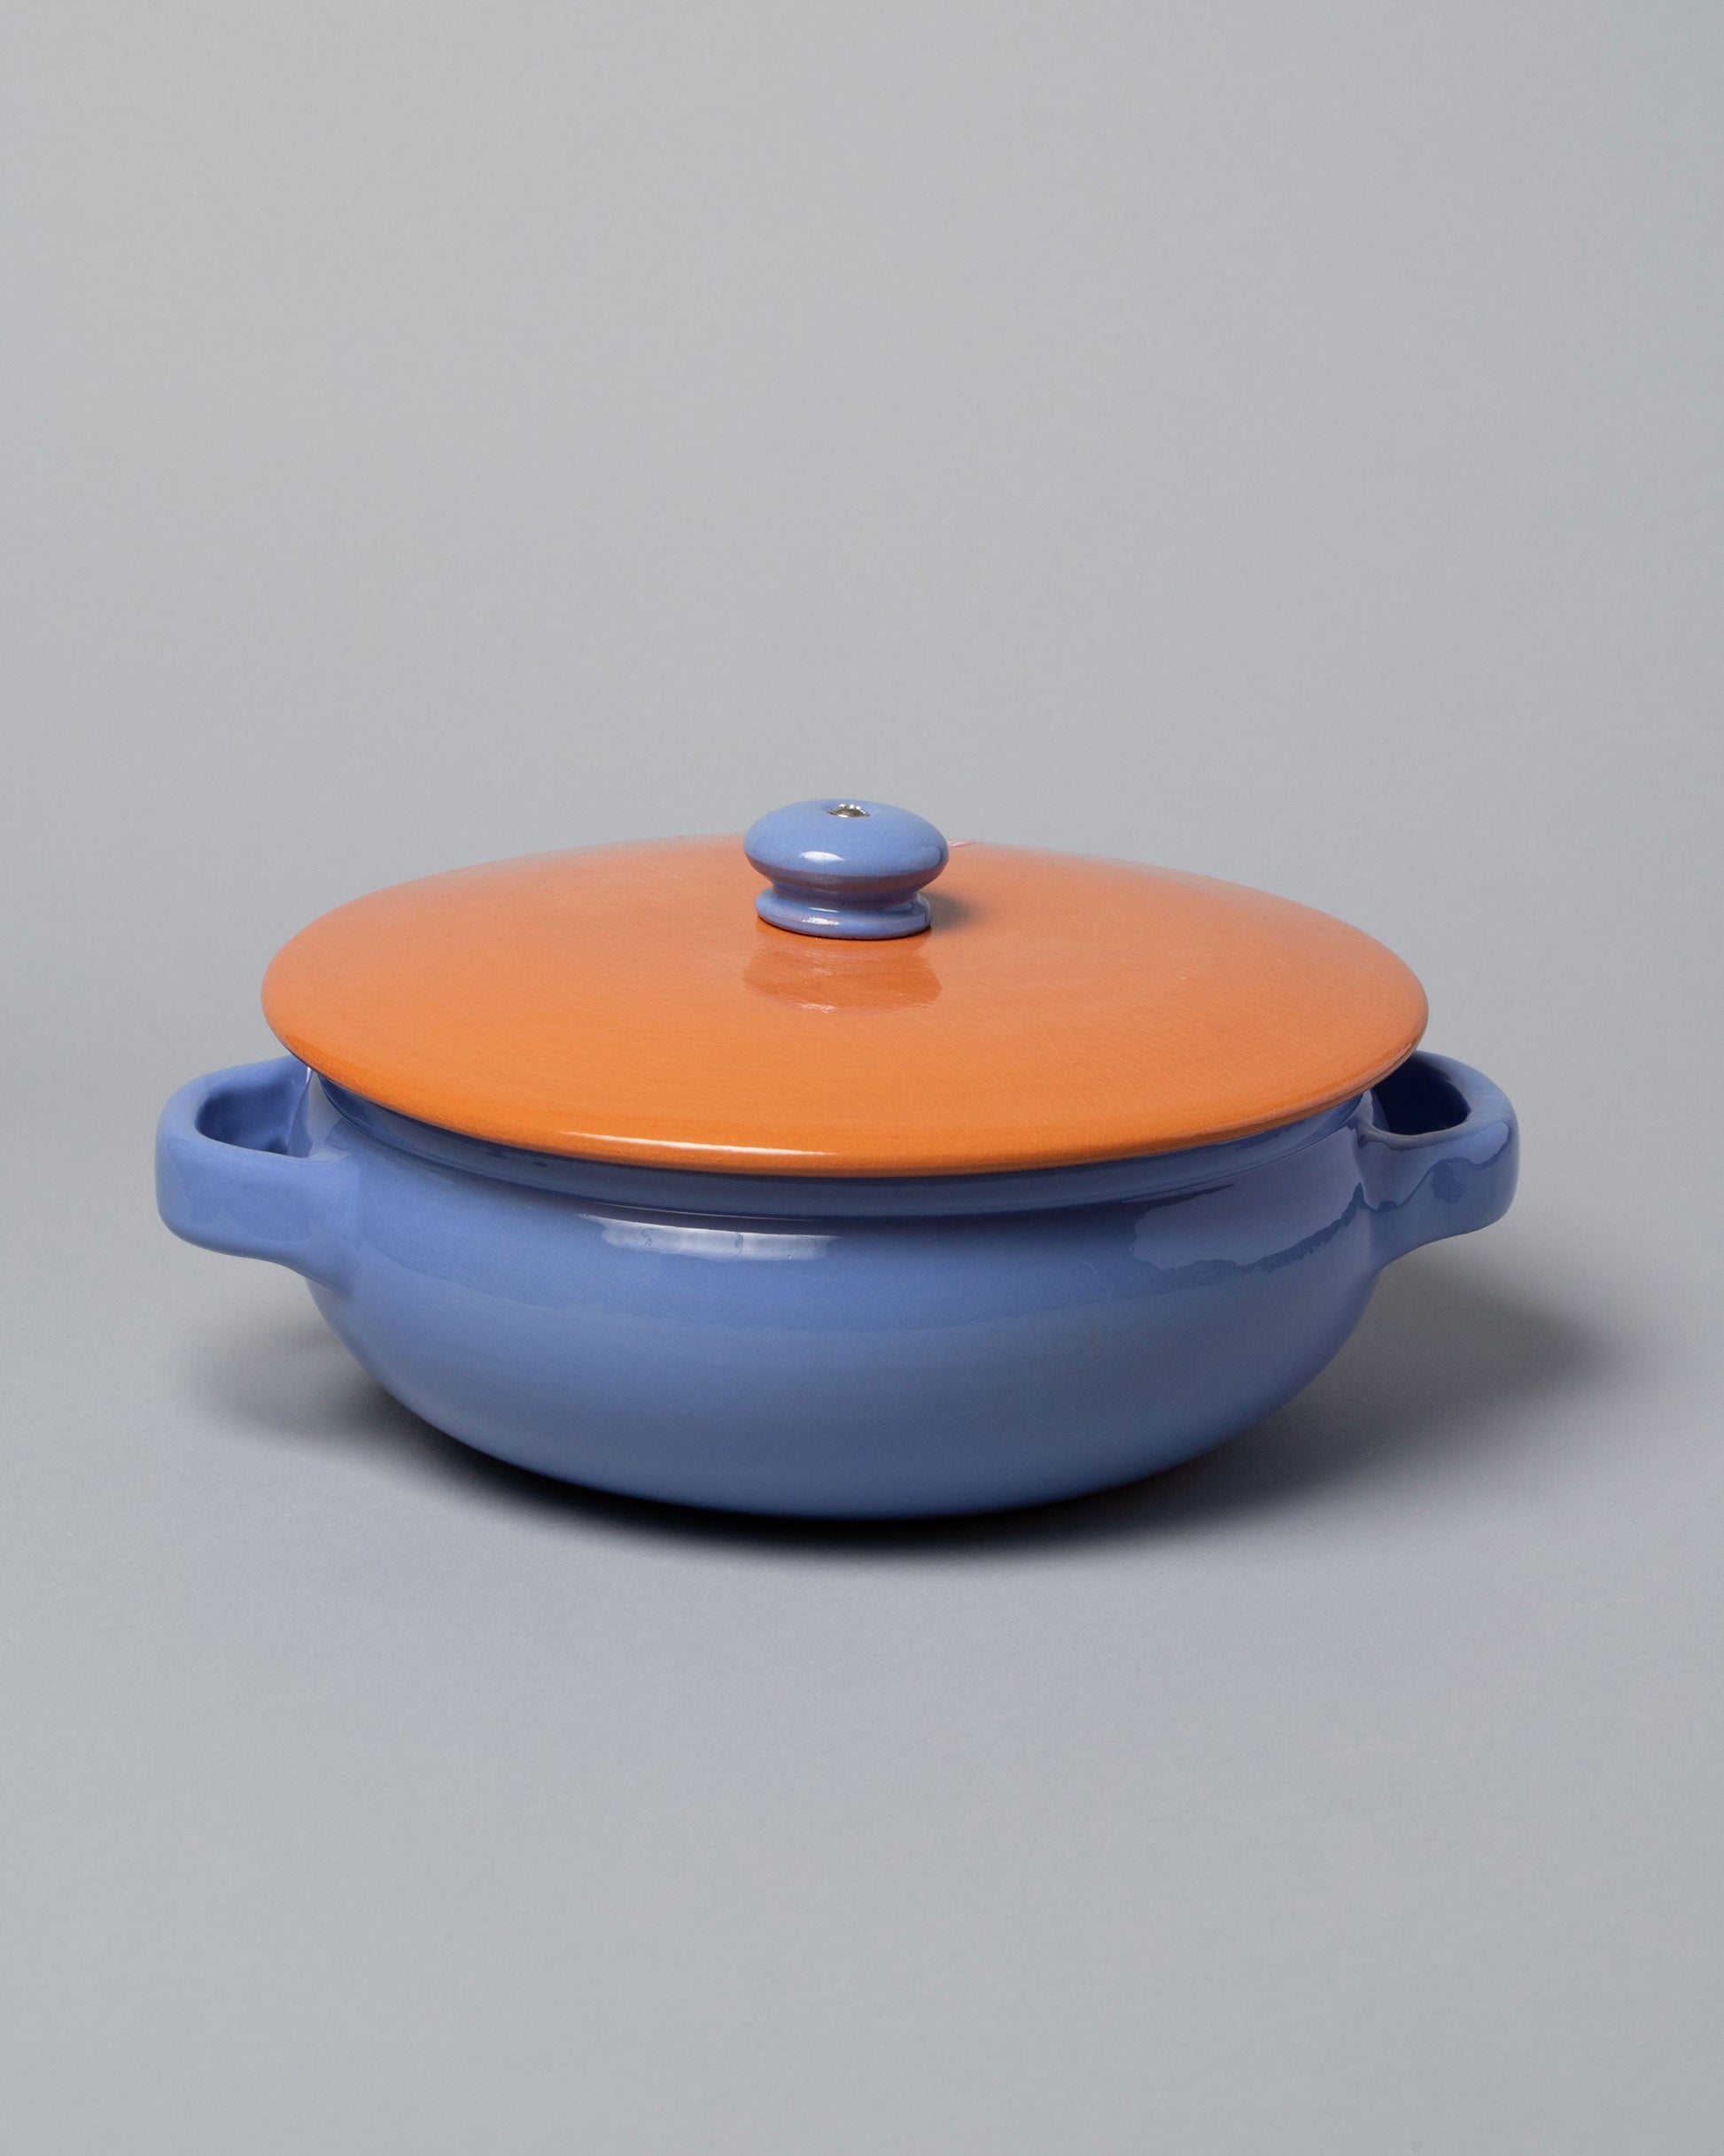  Mazzotti 1903 Large Light Blue and Orange Clay Pot on light color background.